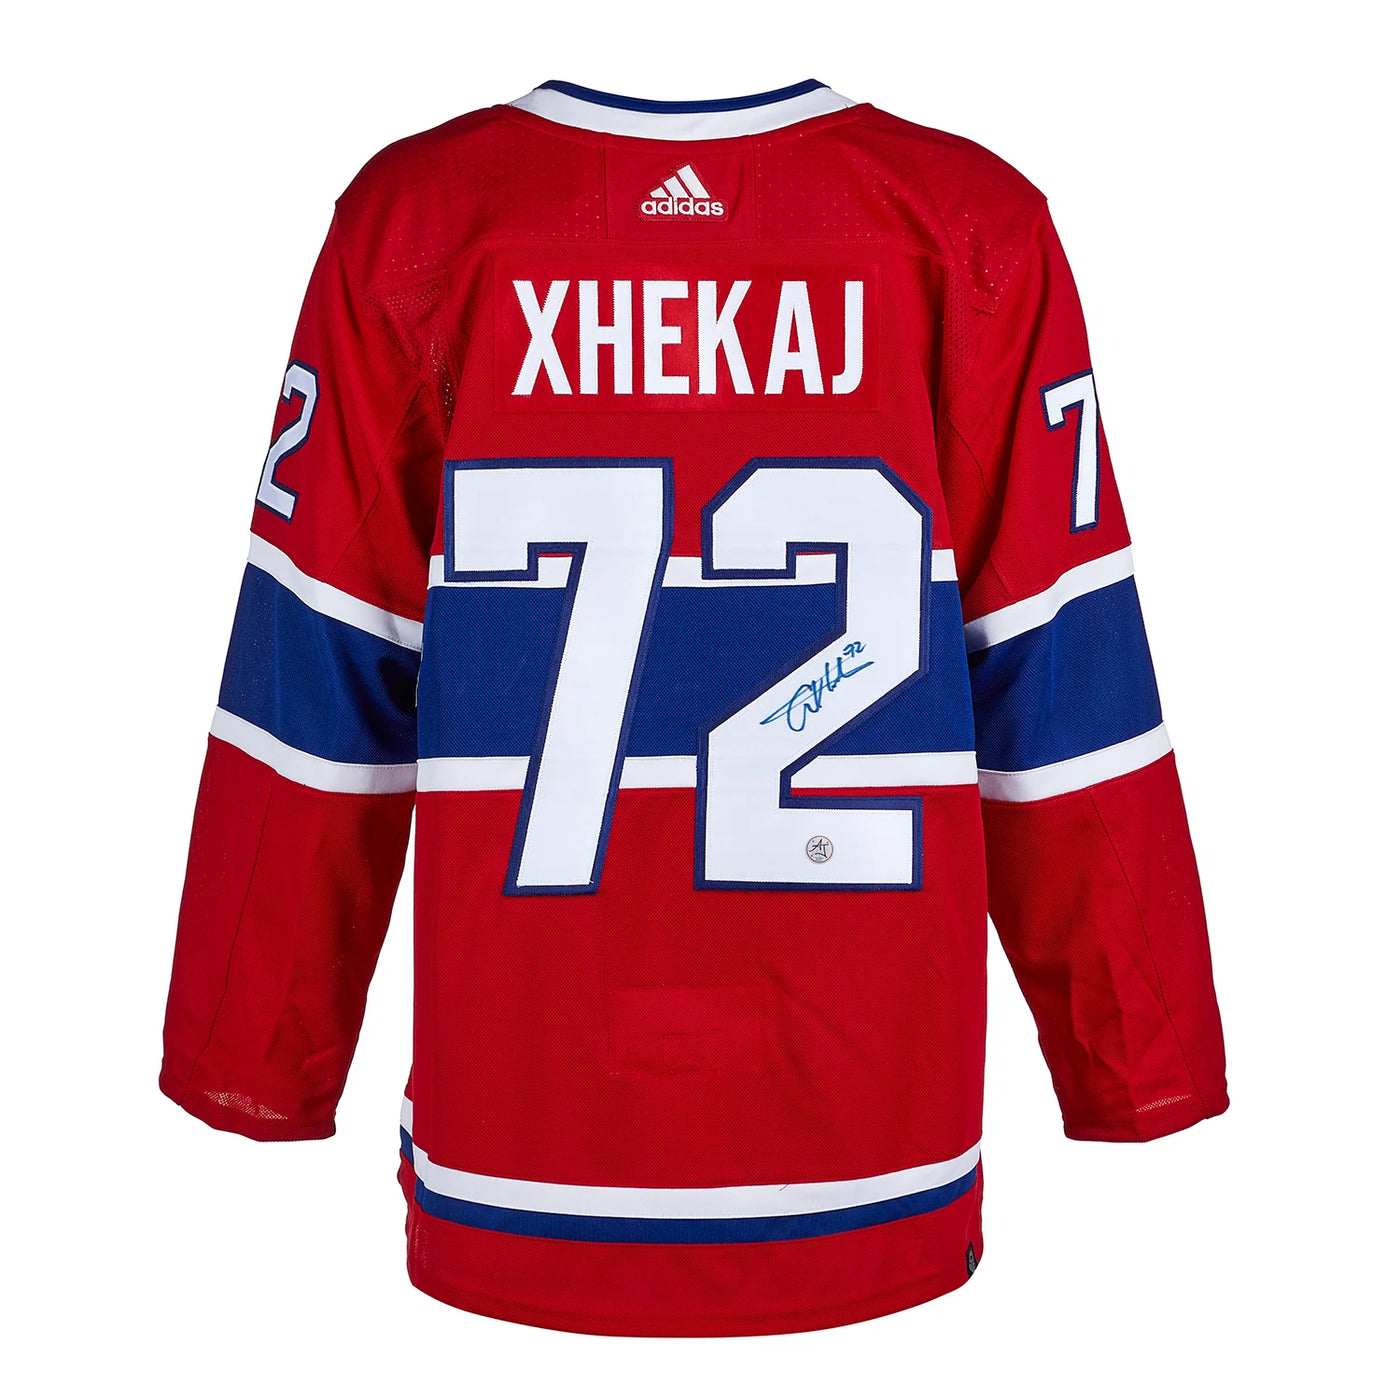 Arber Xhekaj Autographed Montreal Canadiens Adidas Jersey